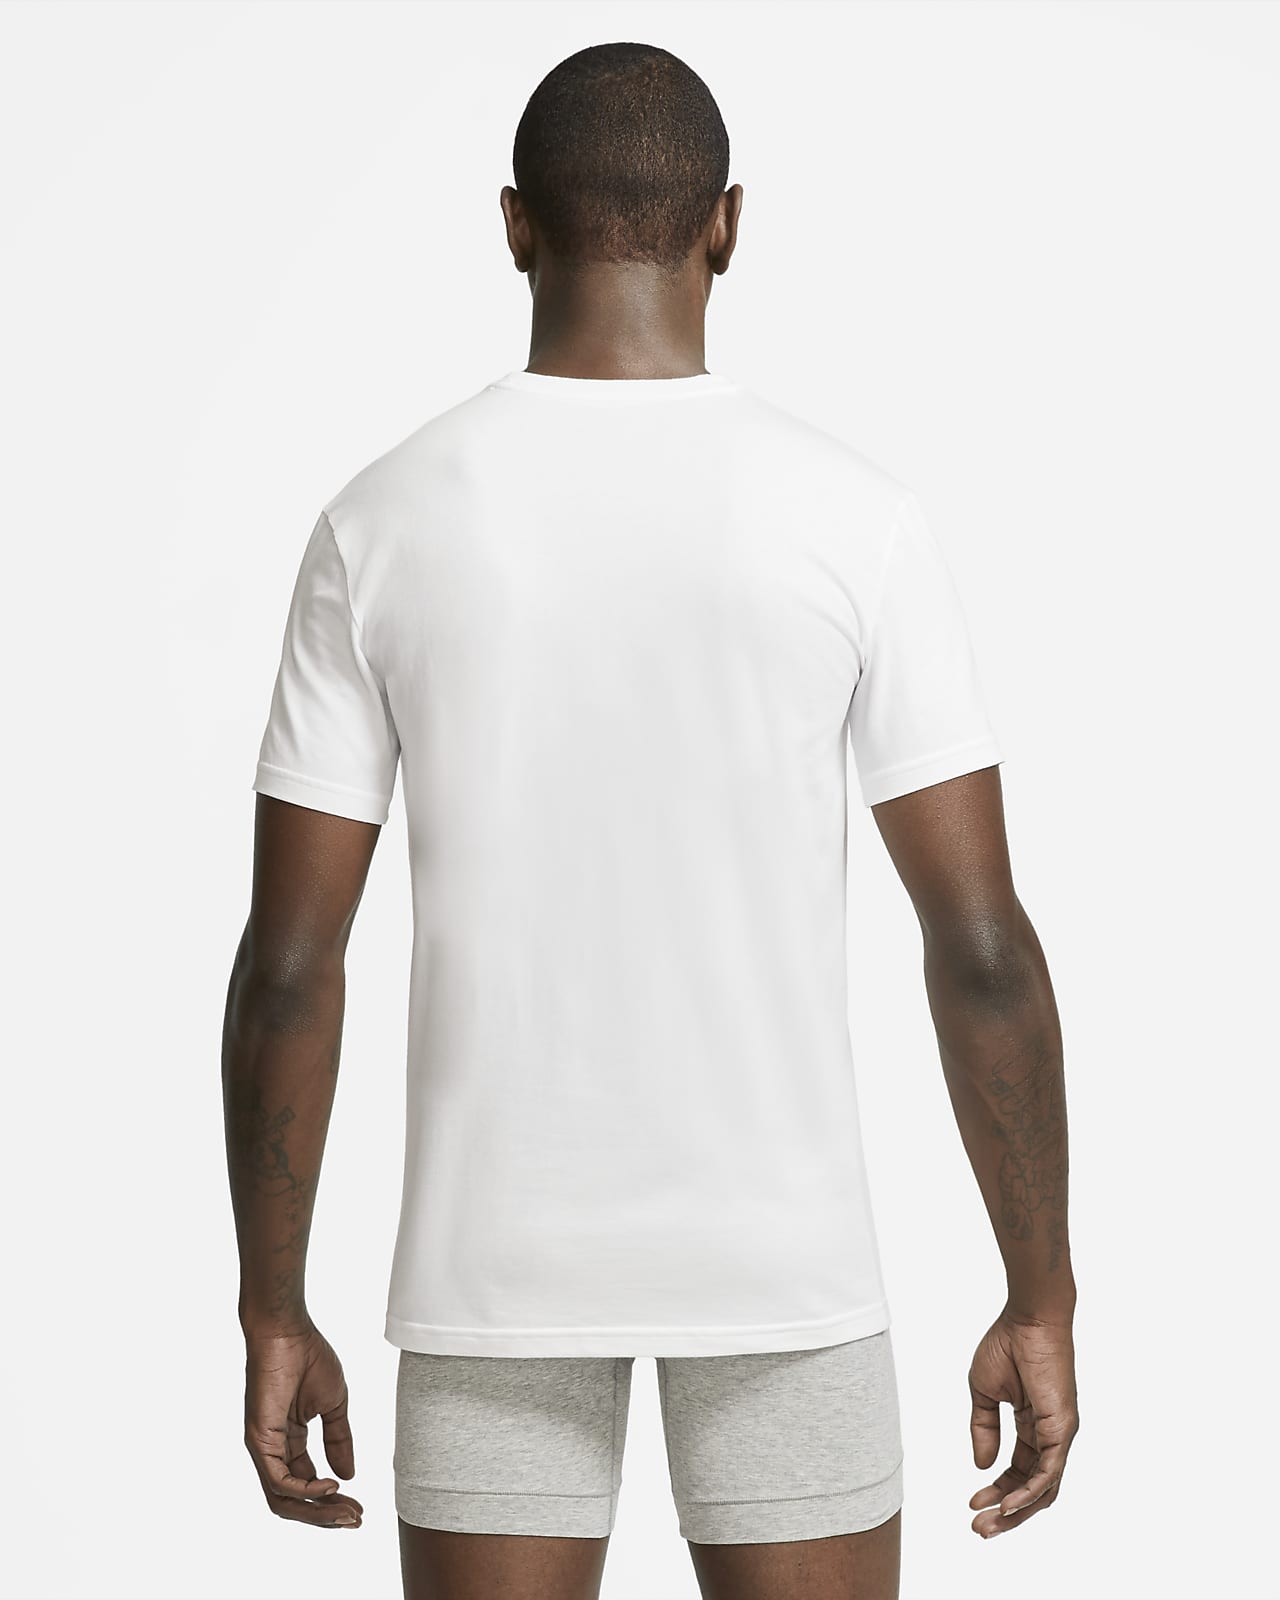 Snocks Camiseta Interior Hombre Cuello Redondo Blanco 4X 